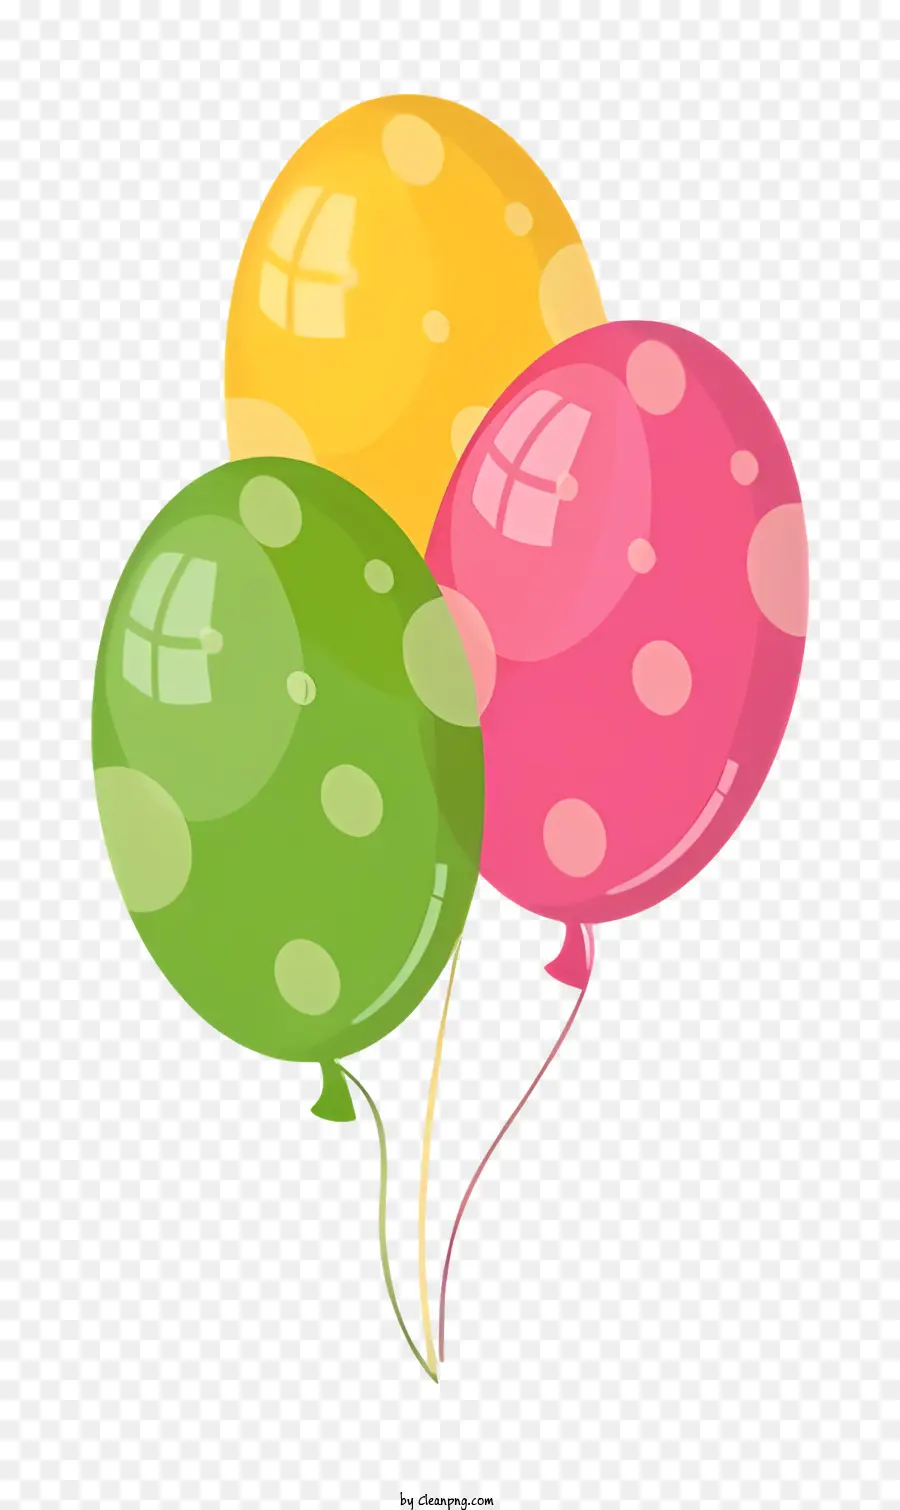 balloons colorful balloons polka dot balloons floating balloons tied balloons